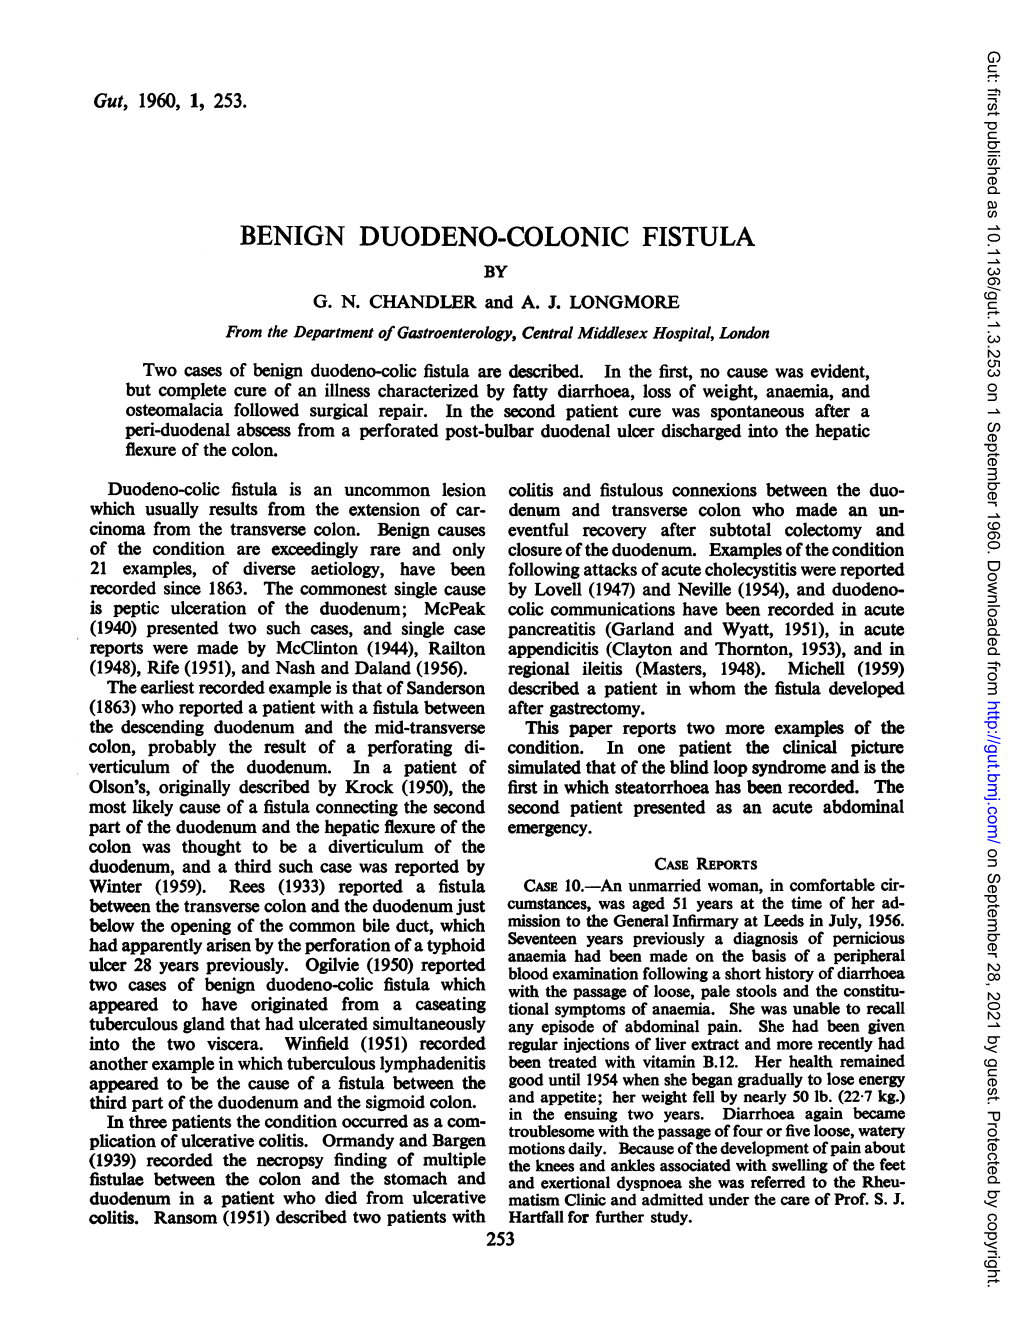 Benign Duodeno-Colonic Fistula by G